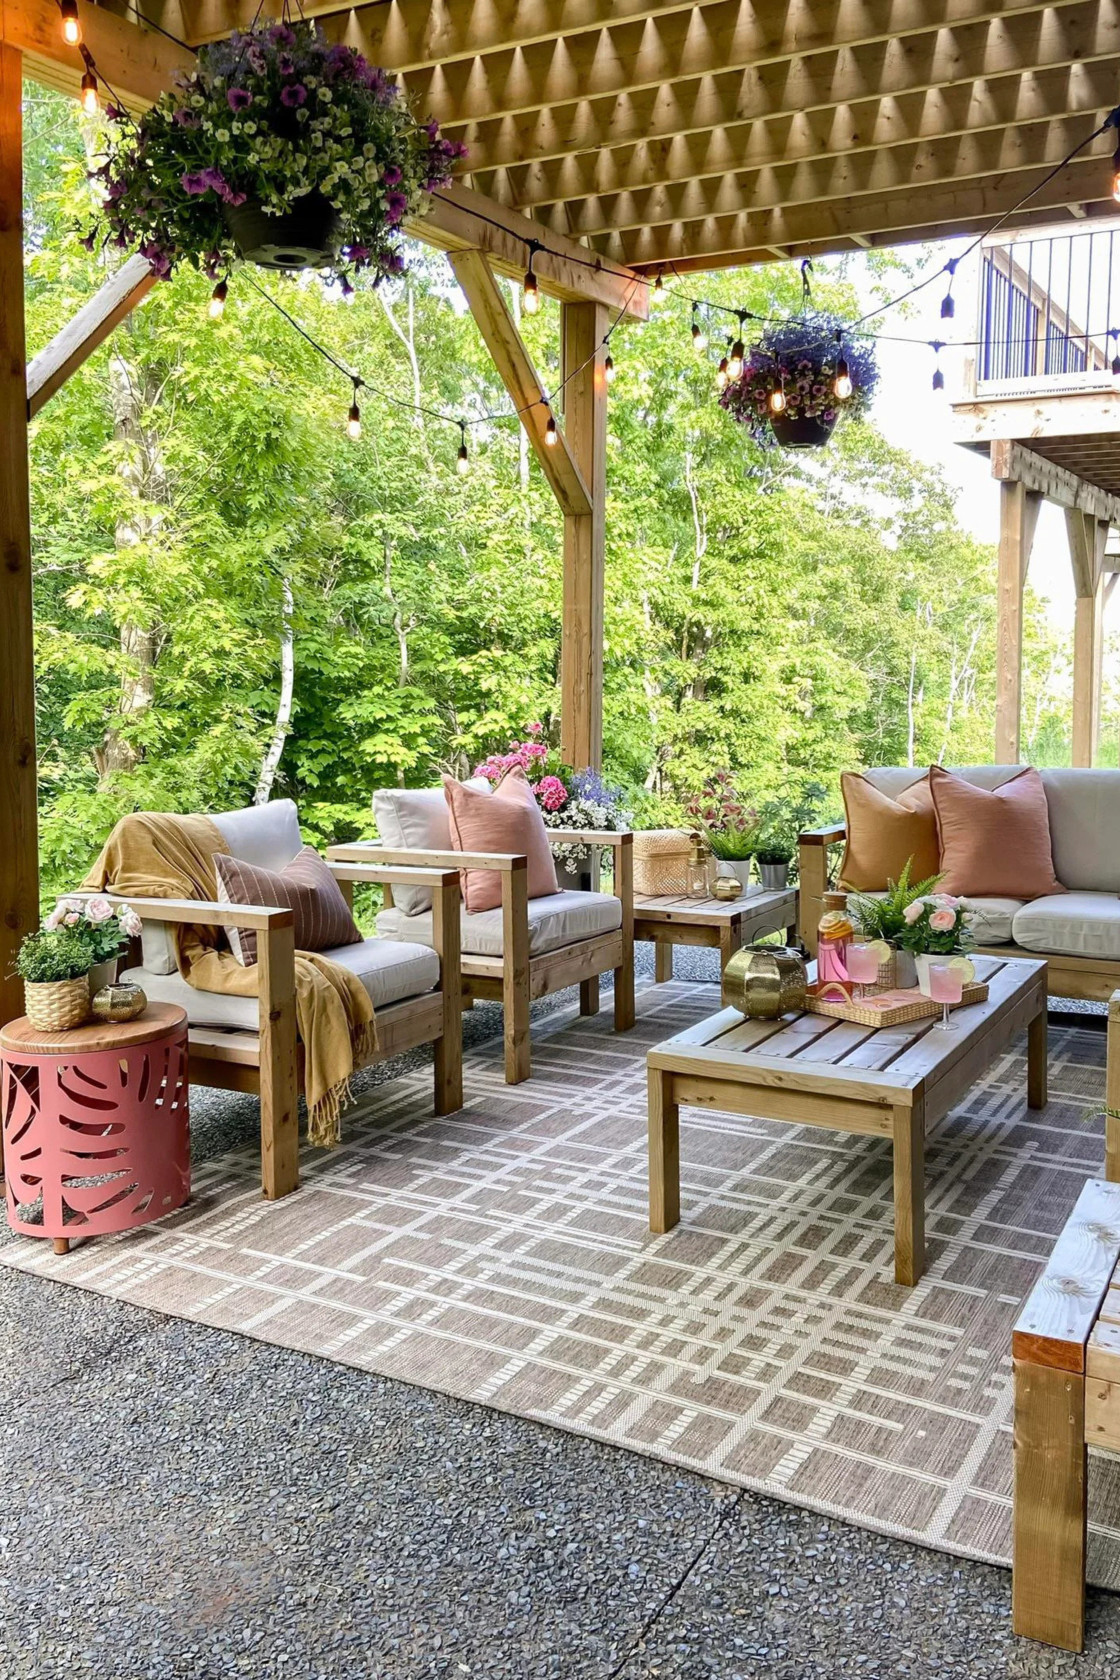 backyard patio decor ideas neutral color schemes flowers and floral pops of color accent colors